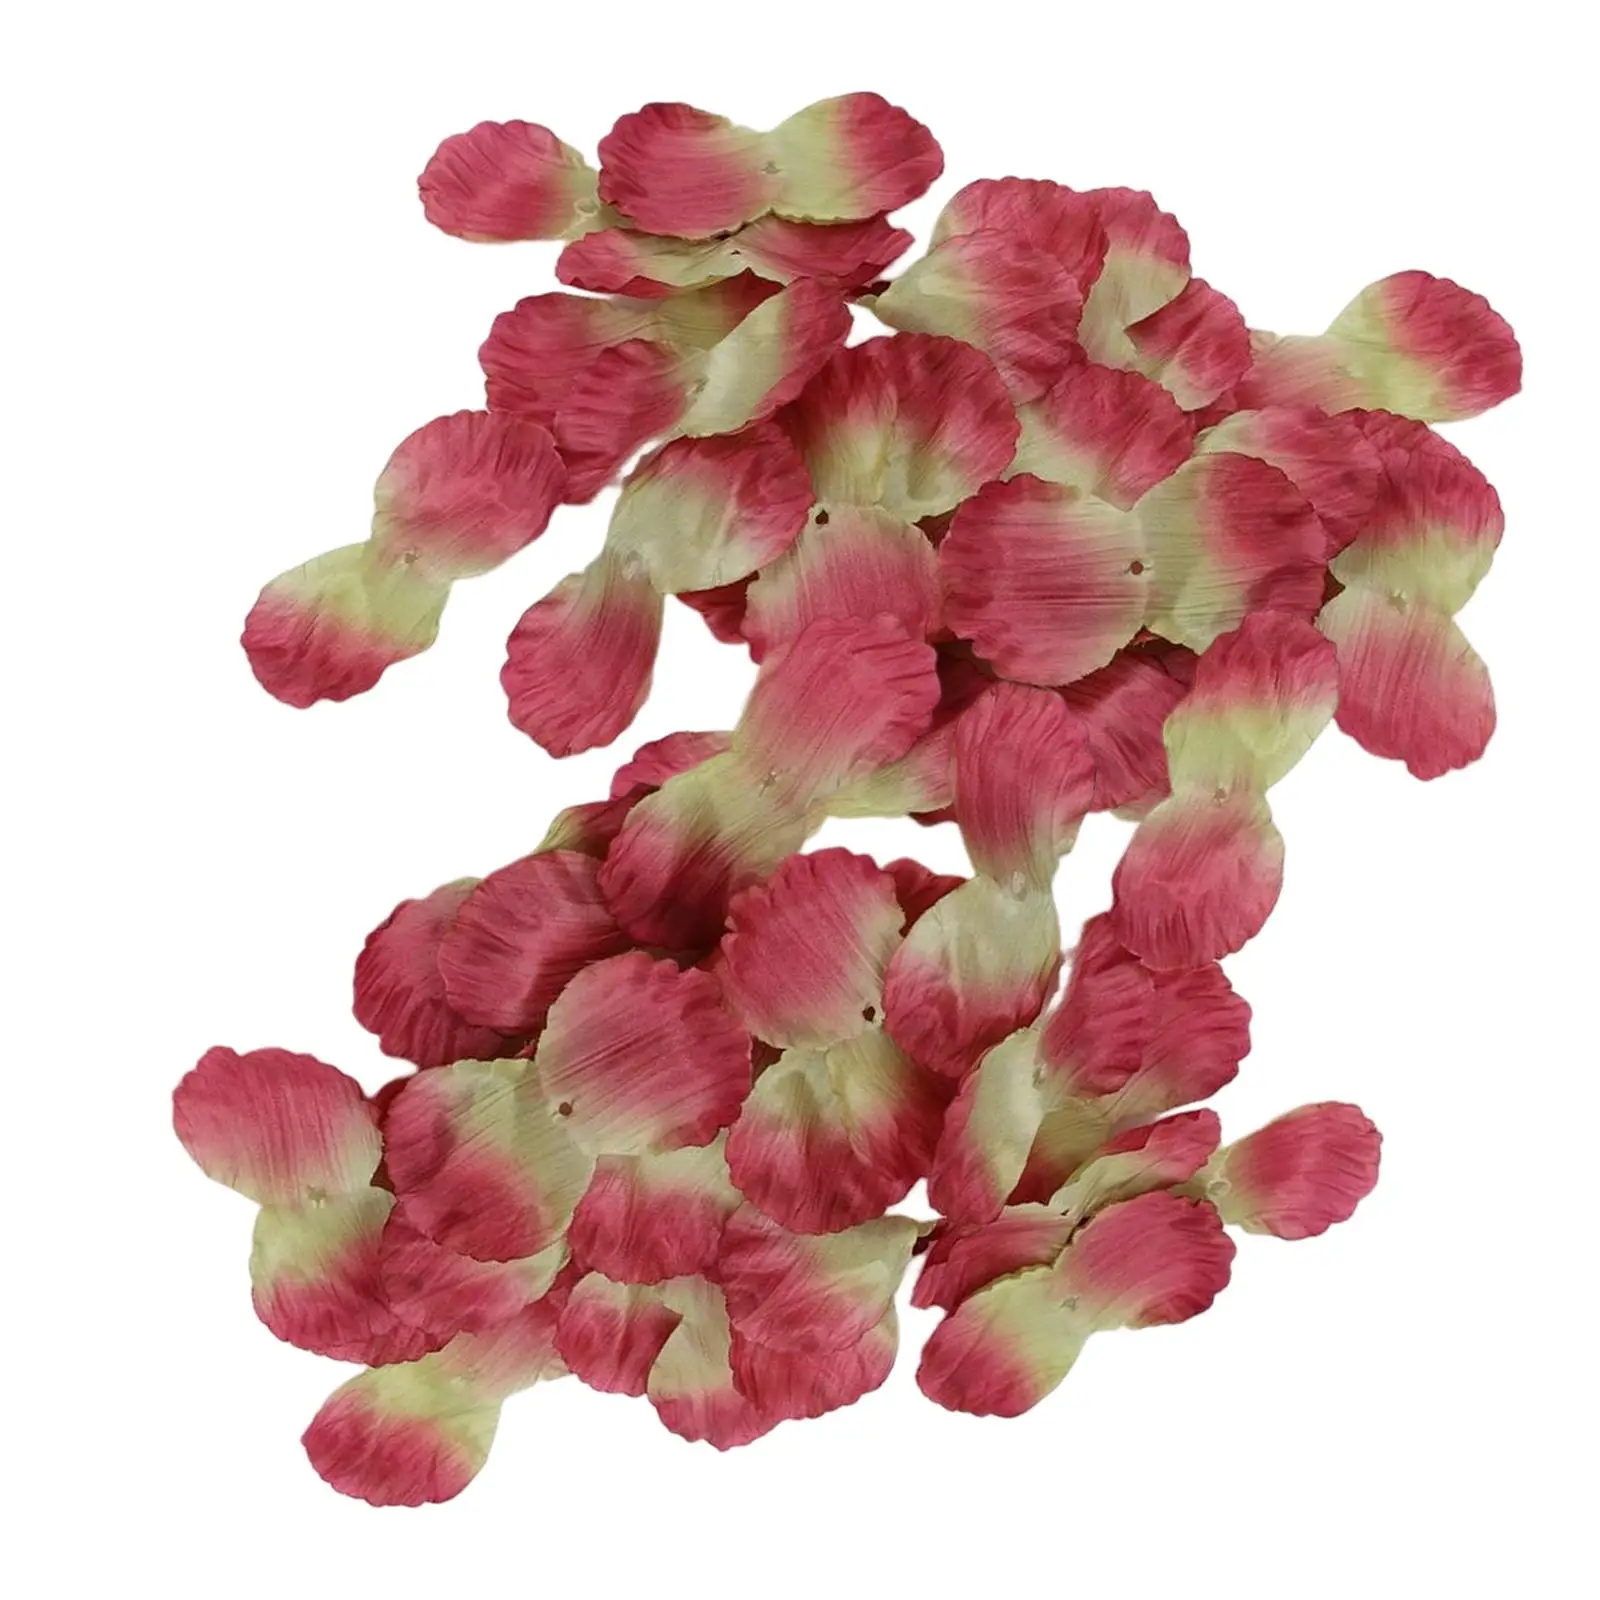 300x Artificial Flower Petals Wedding decoration Romantic for Party